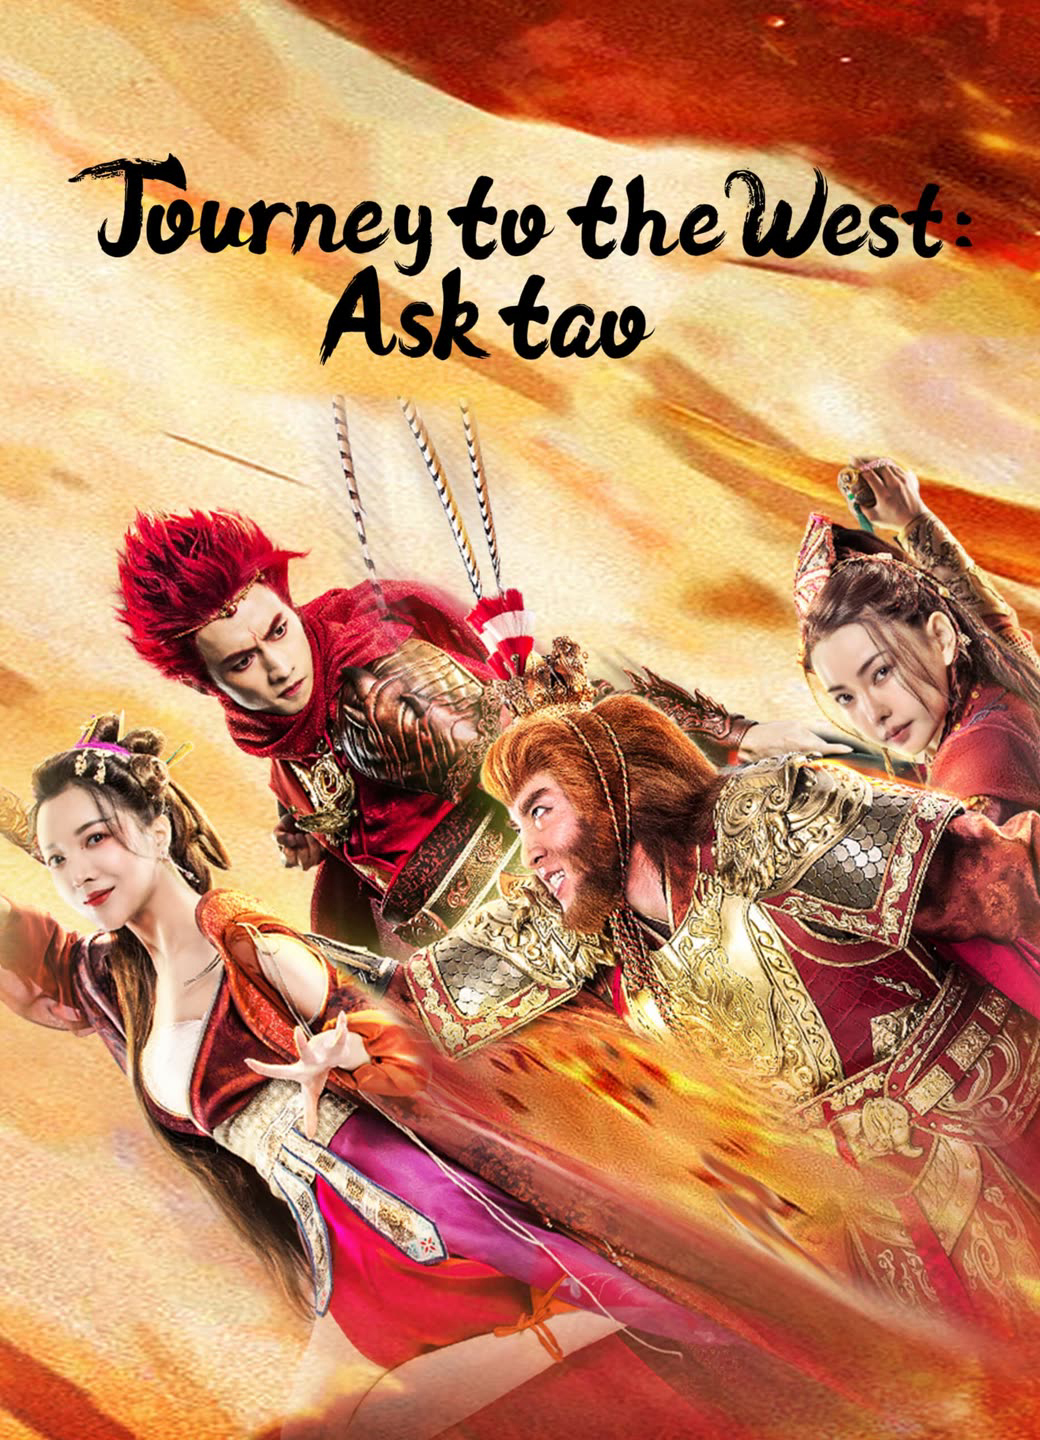 Xem Phim Tây Du Vấn Đạo (Journey to the West: Ask tao)